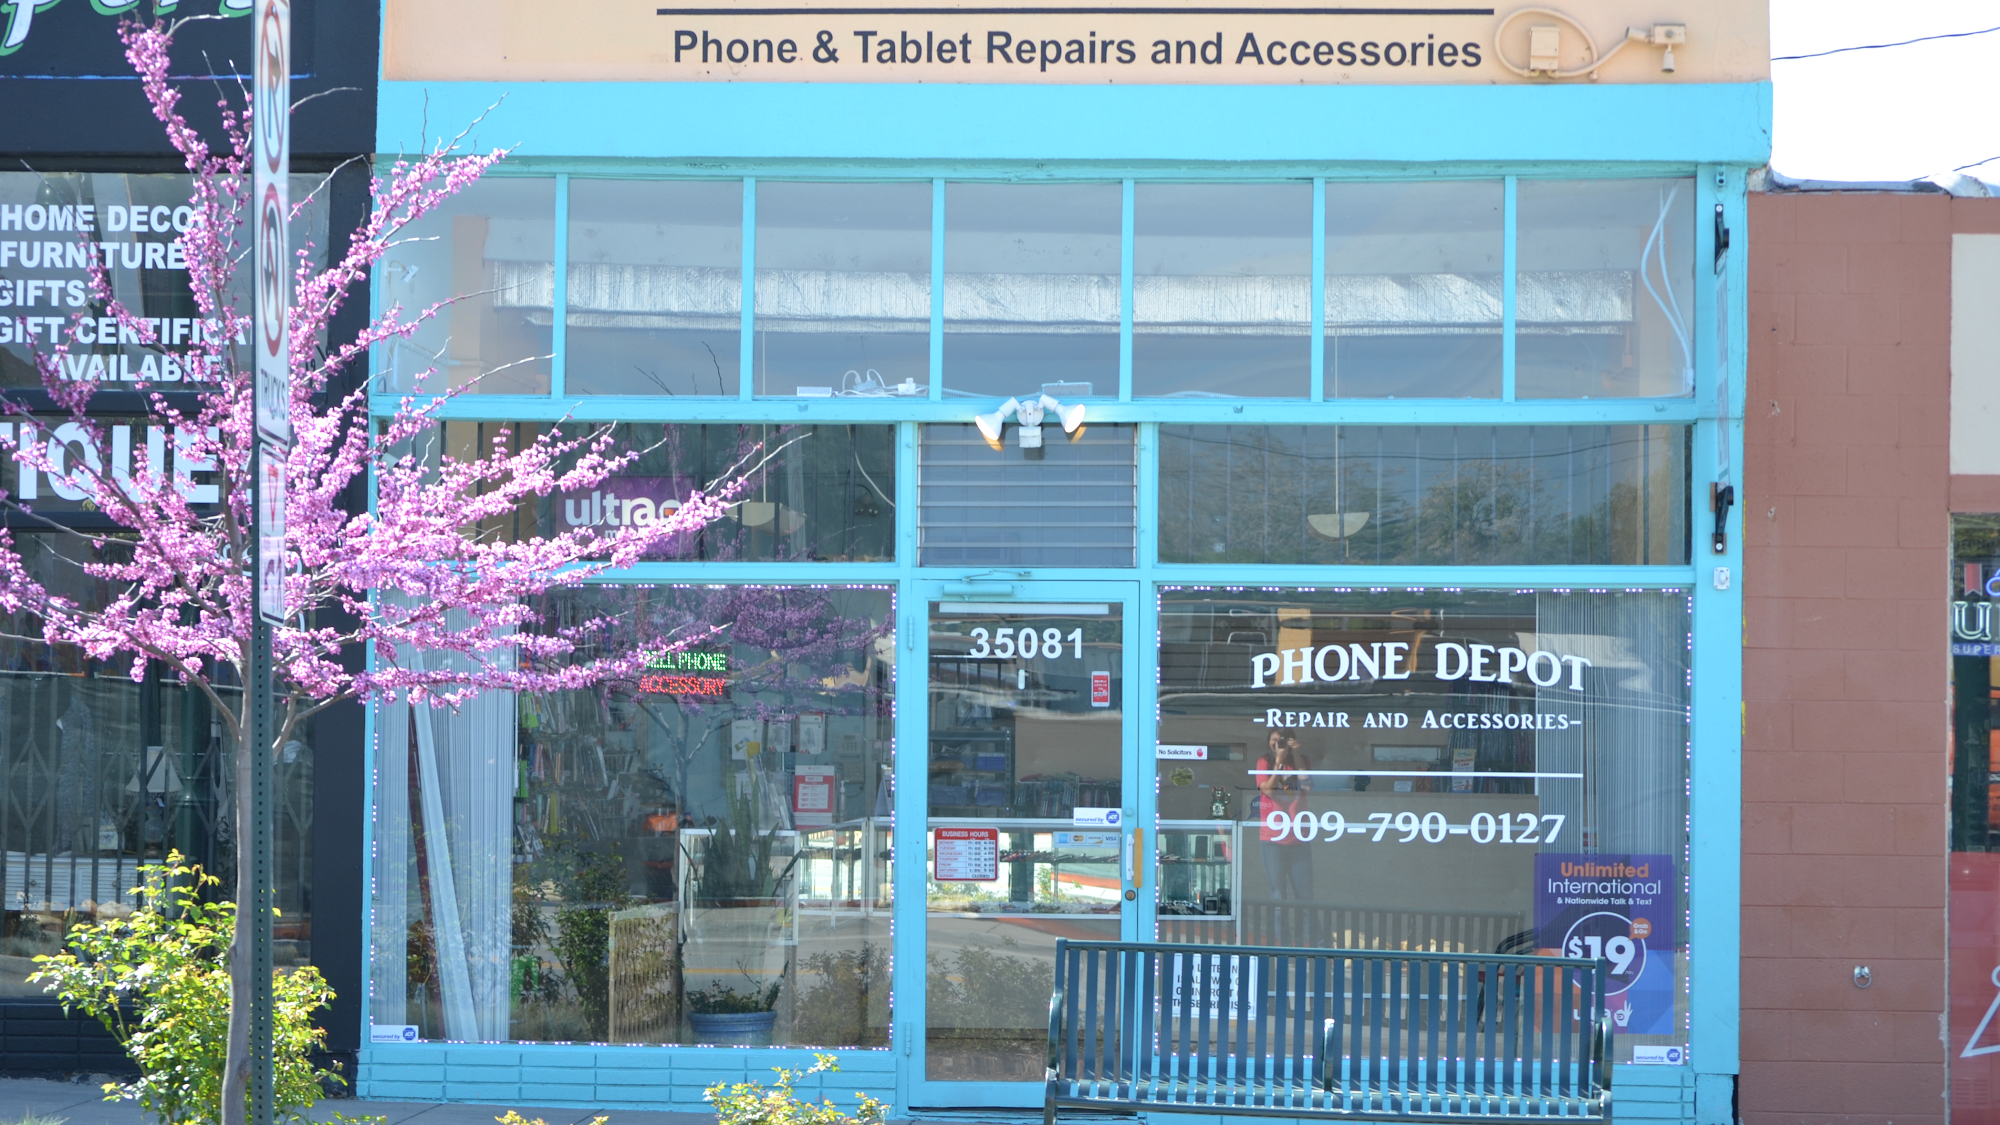 Phone Depot Repair and Accessories